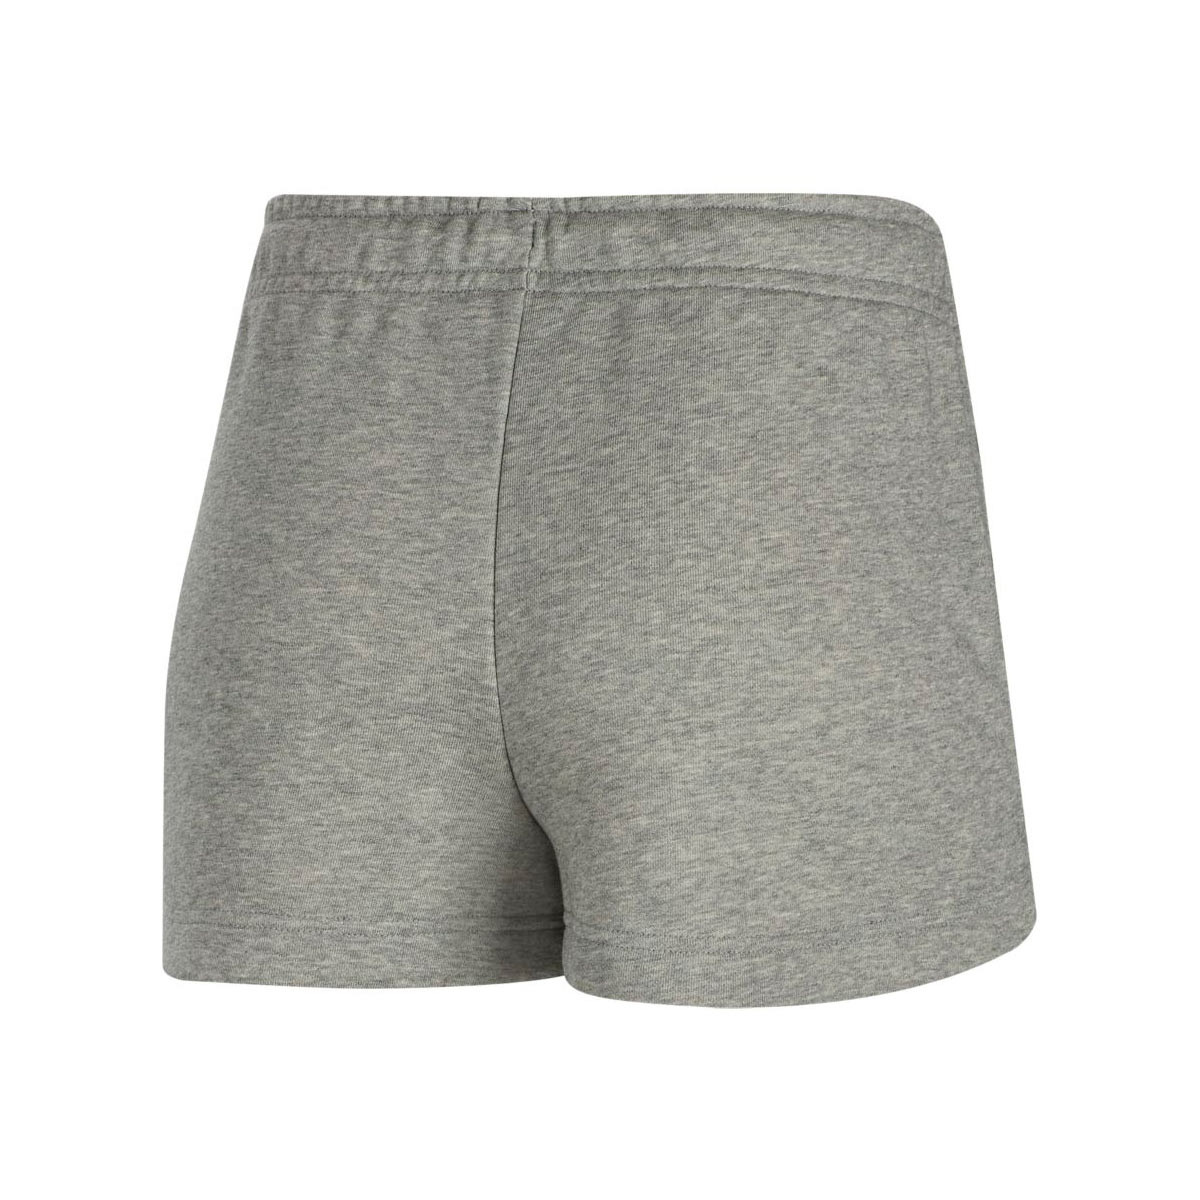 dark grey nike shorts womens